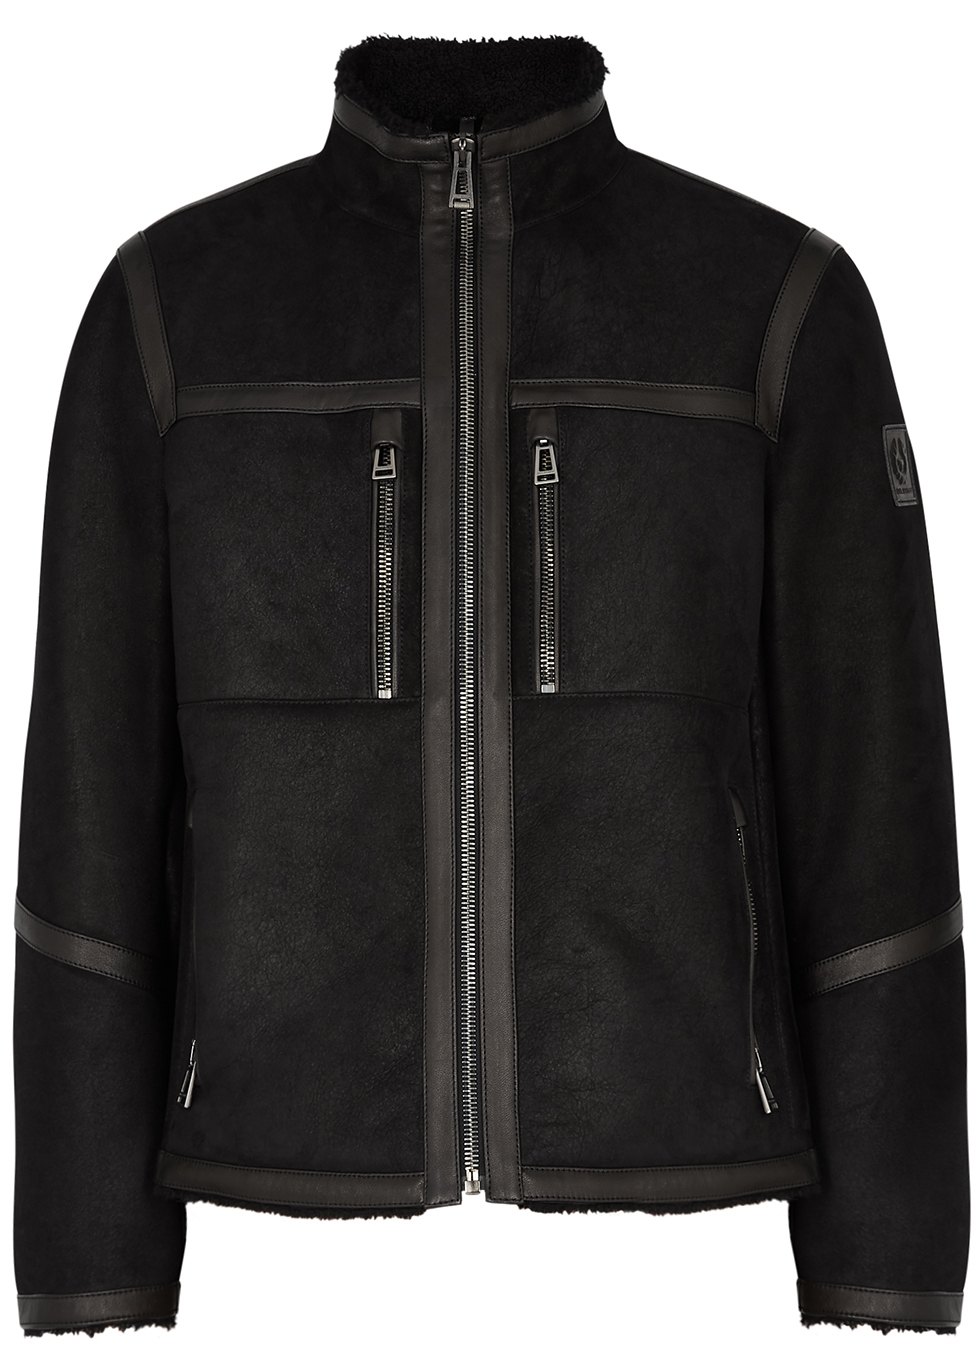 Harvey Nichols Men Clothing Jackets Shearling Jackets Tundra black shearling jacket 